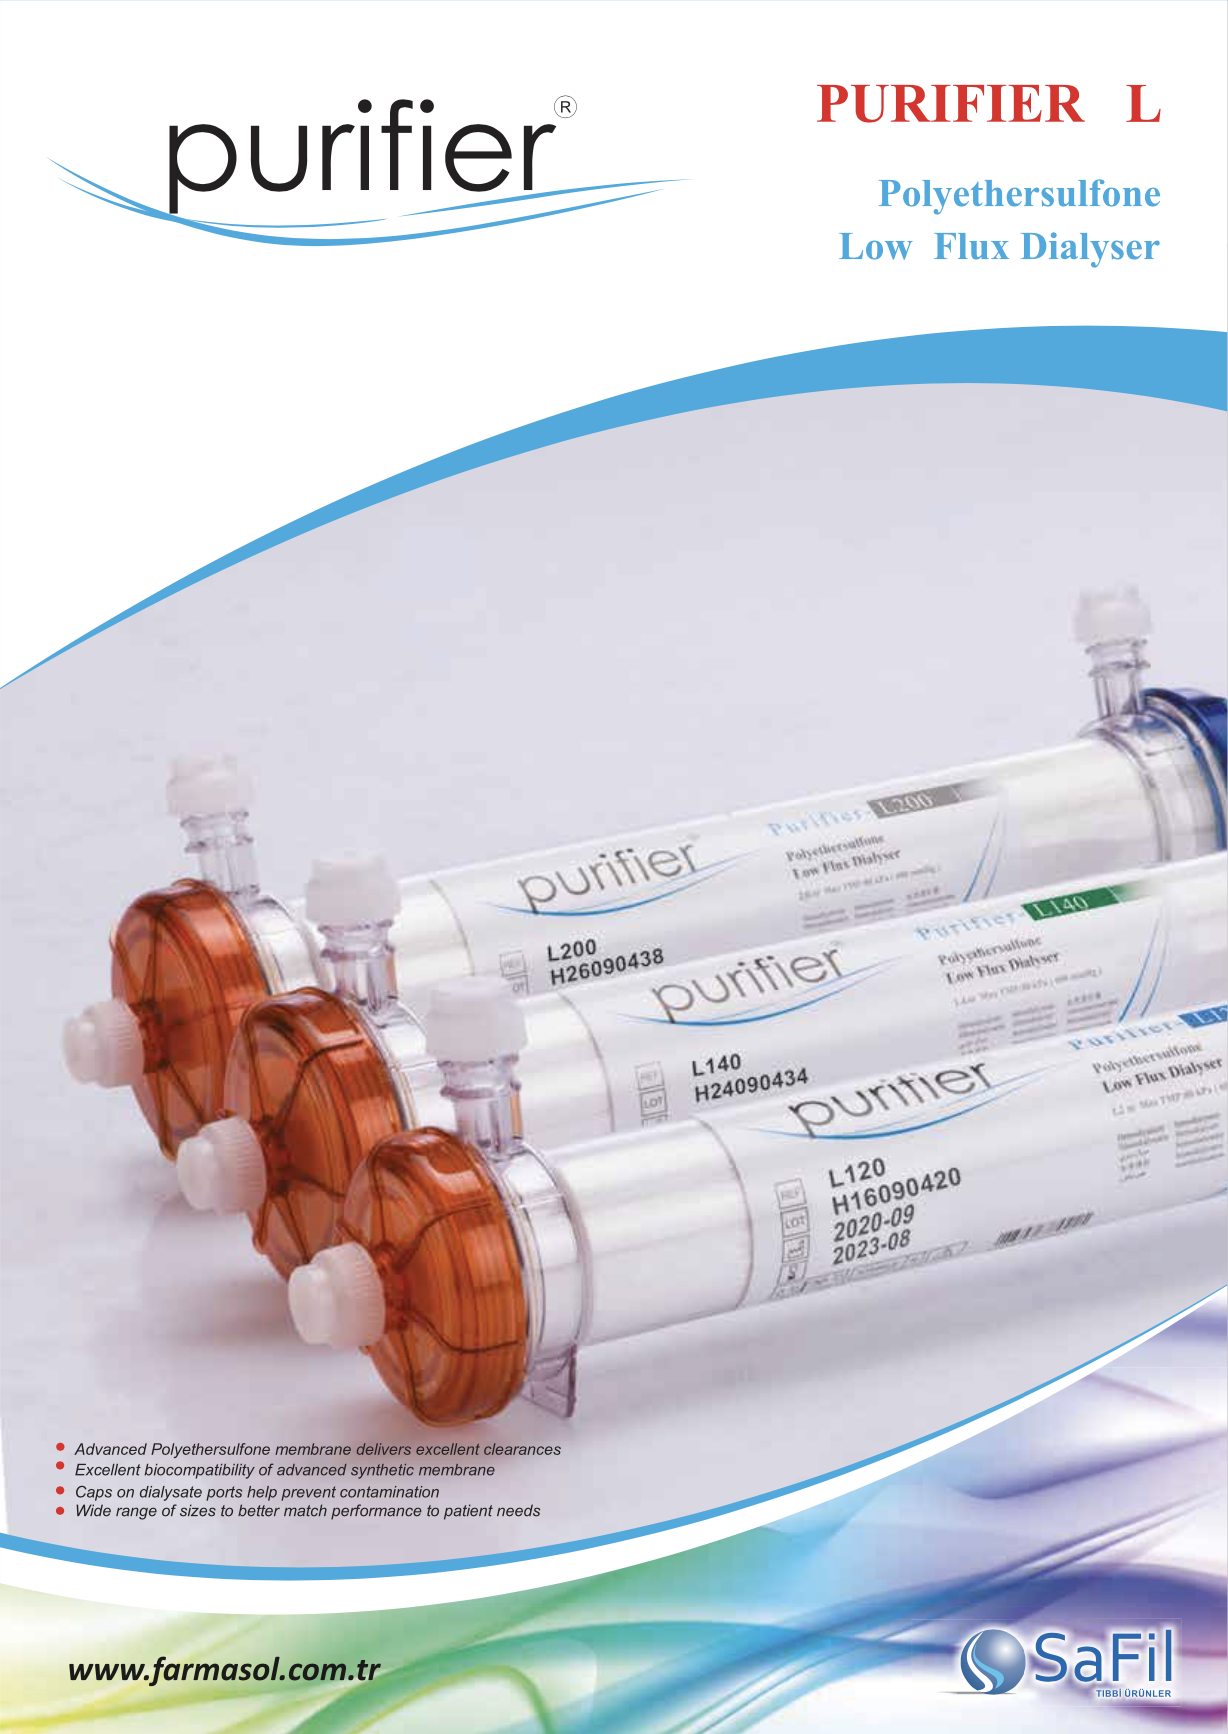 Purifier Low-Flux Dialyzer Brochure